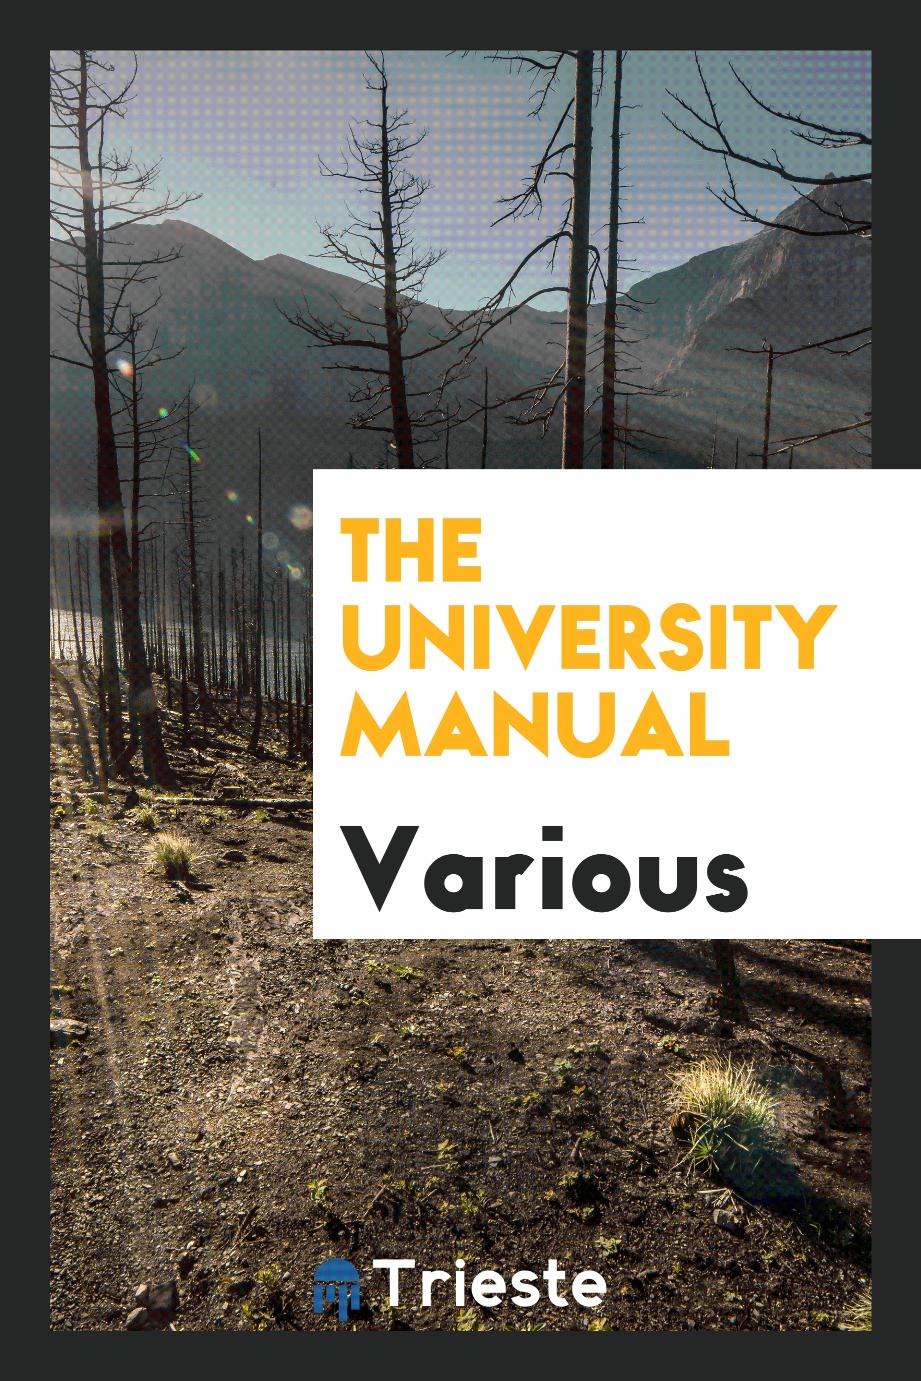 The University manual